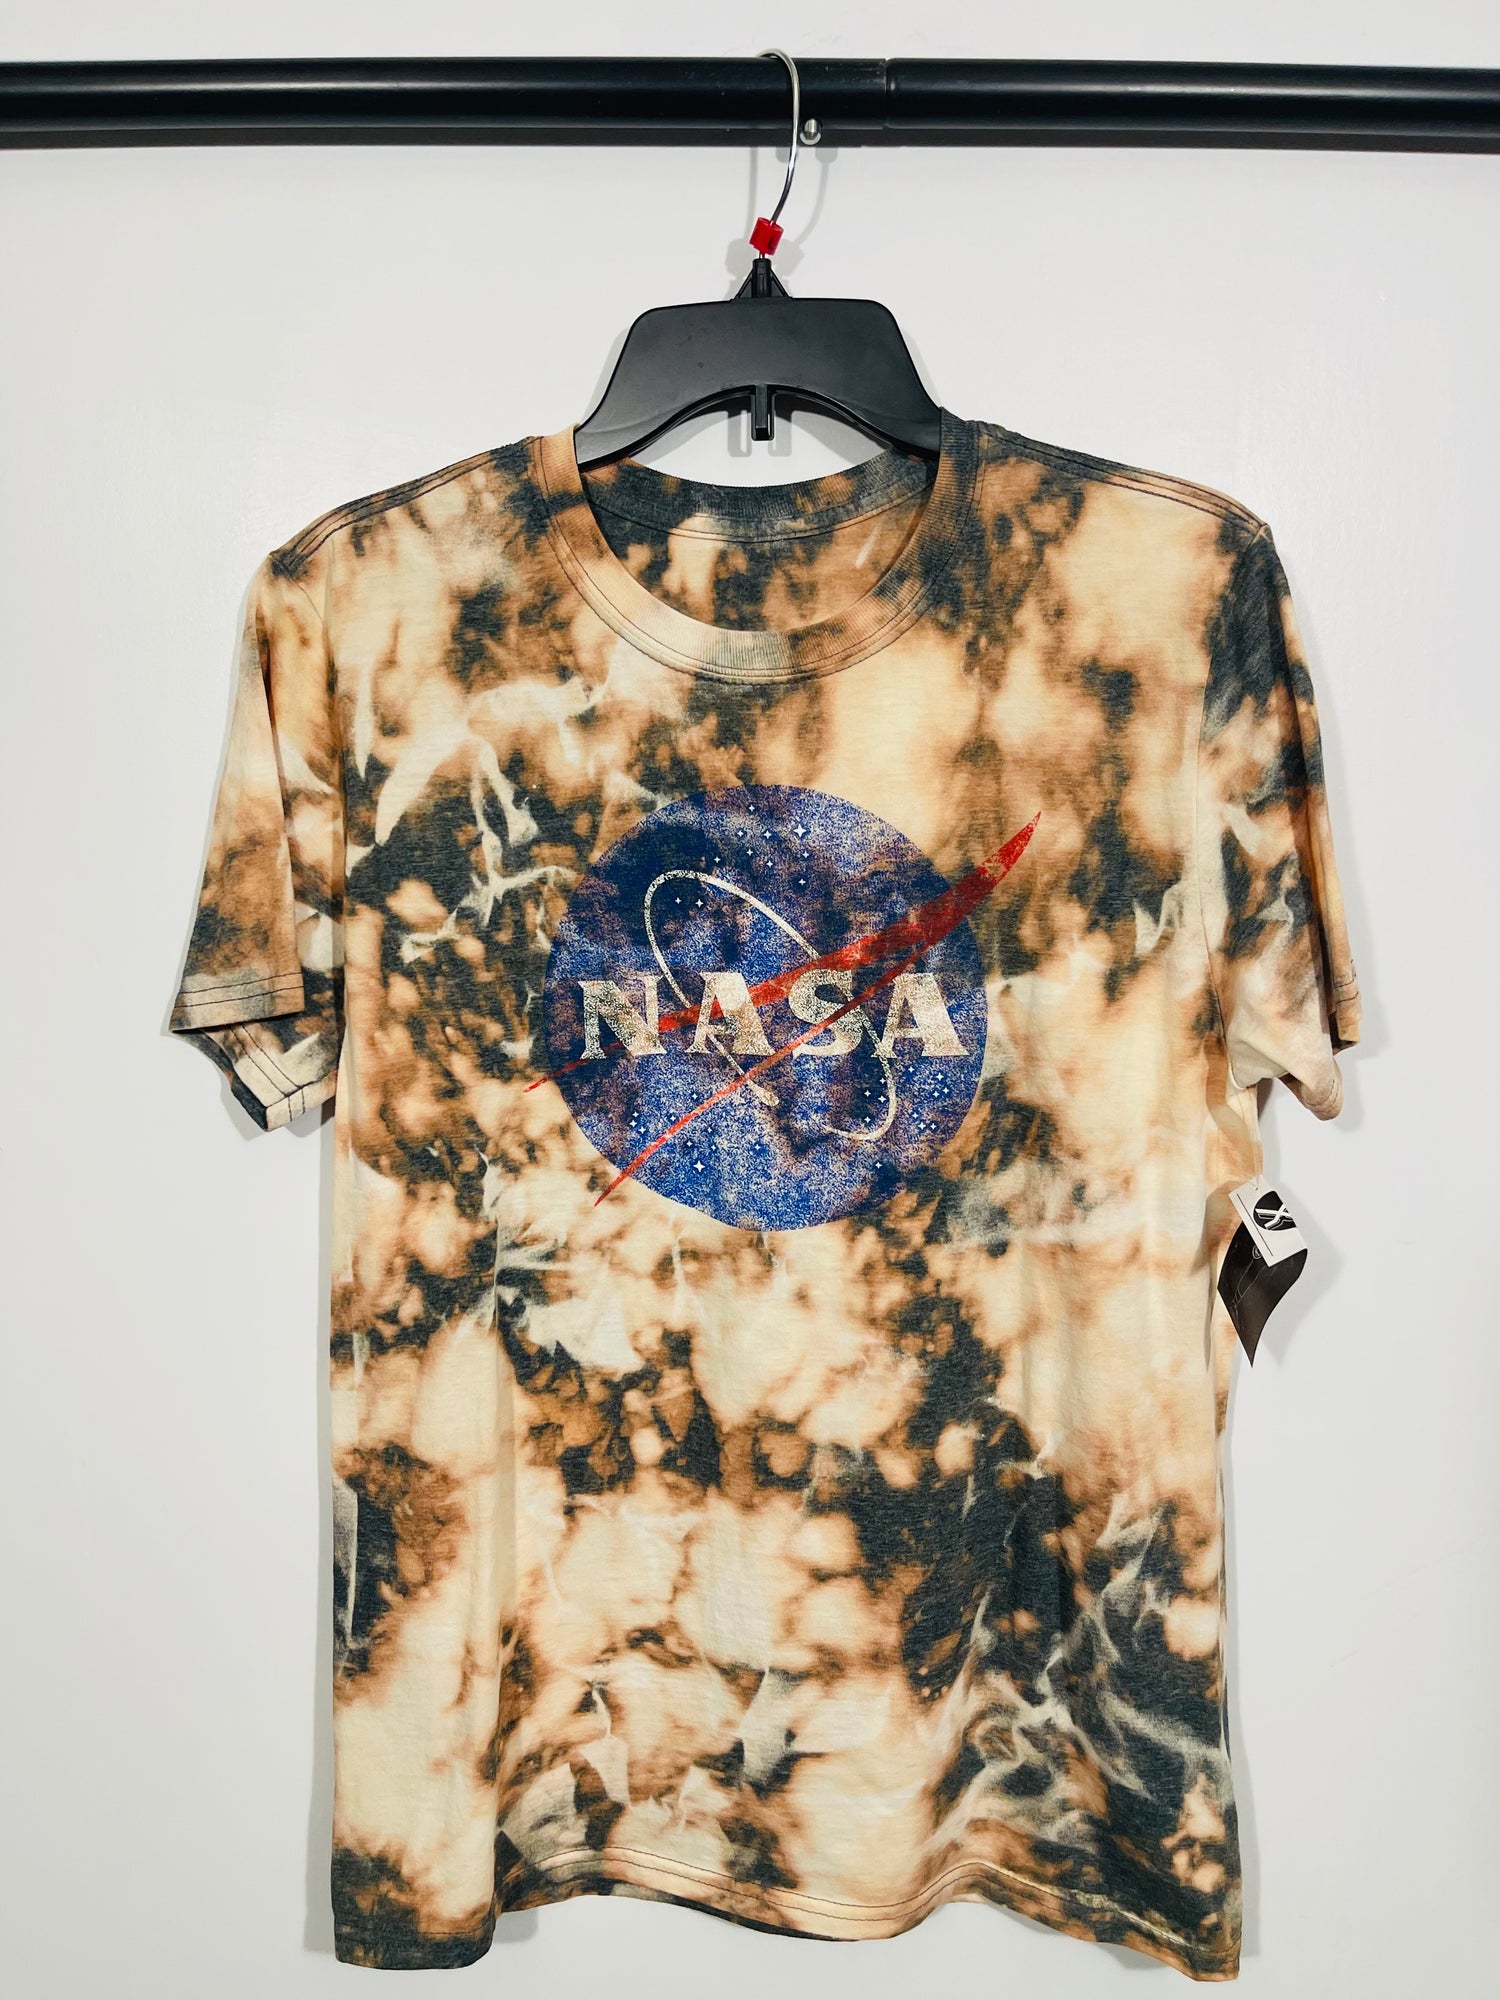 Unisex Large NASA Tee - Kicks and Kindness - Shirts & Tops -